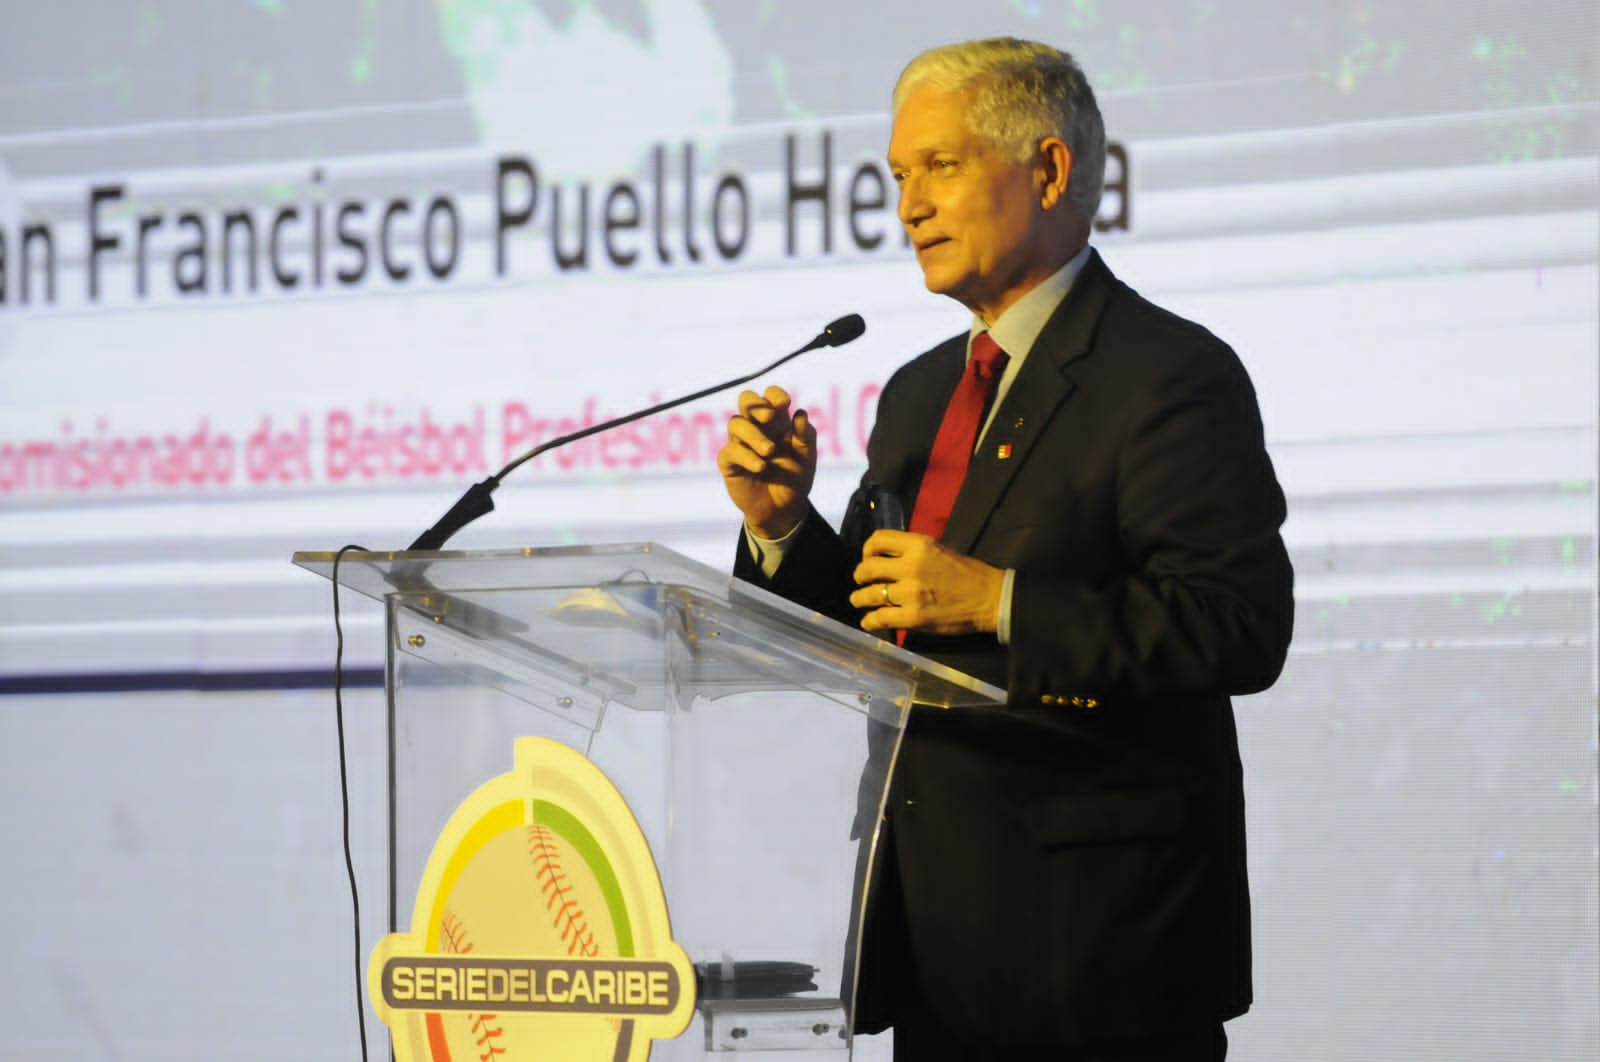 Juan Francisco Puello Herrera